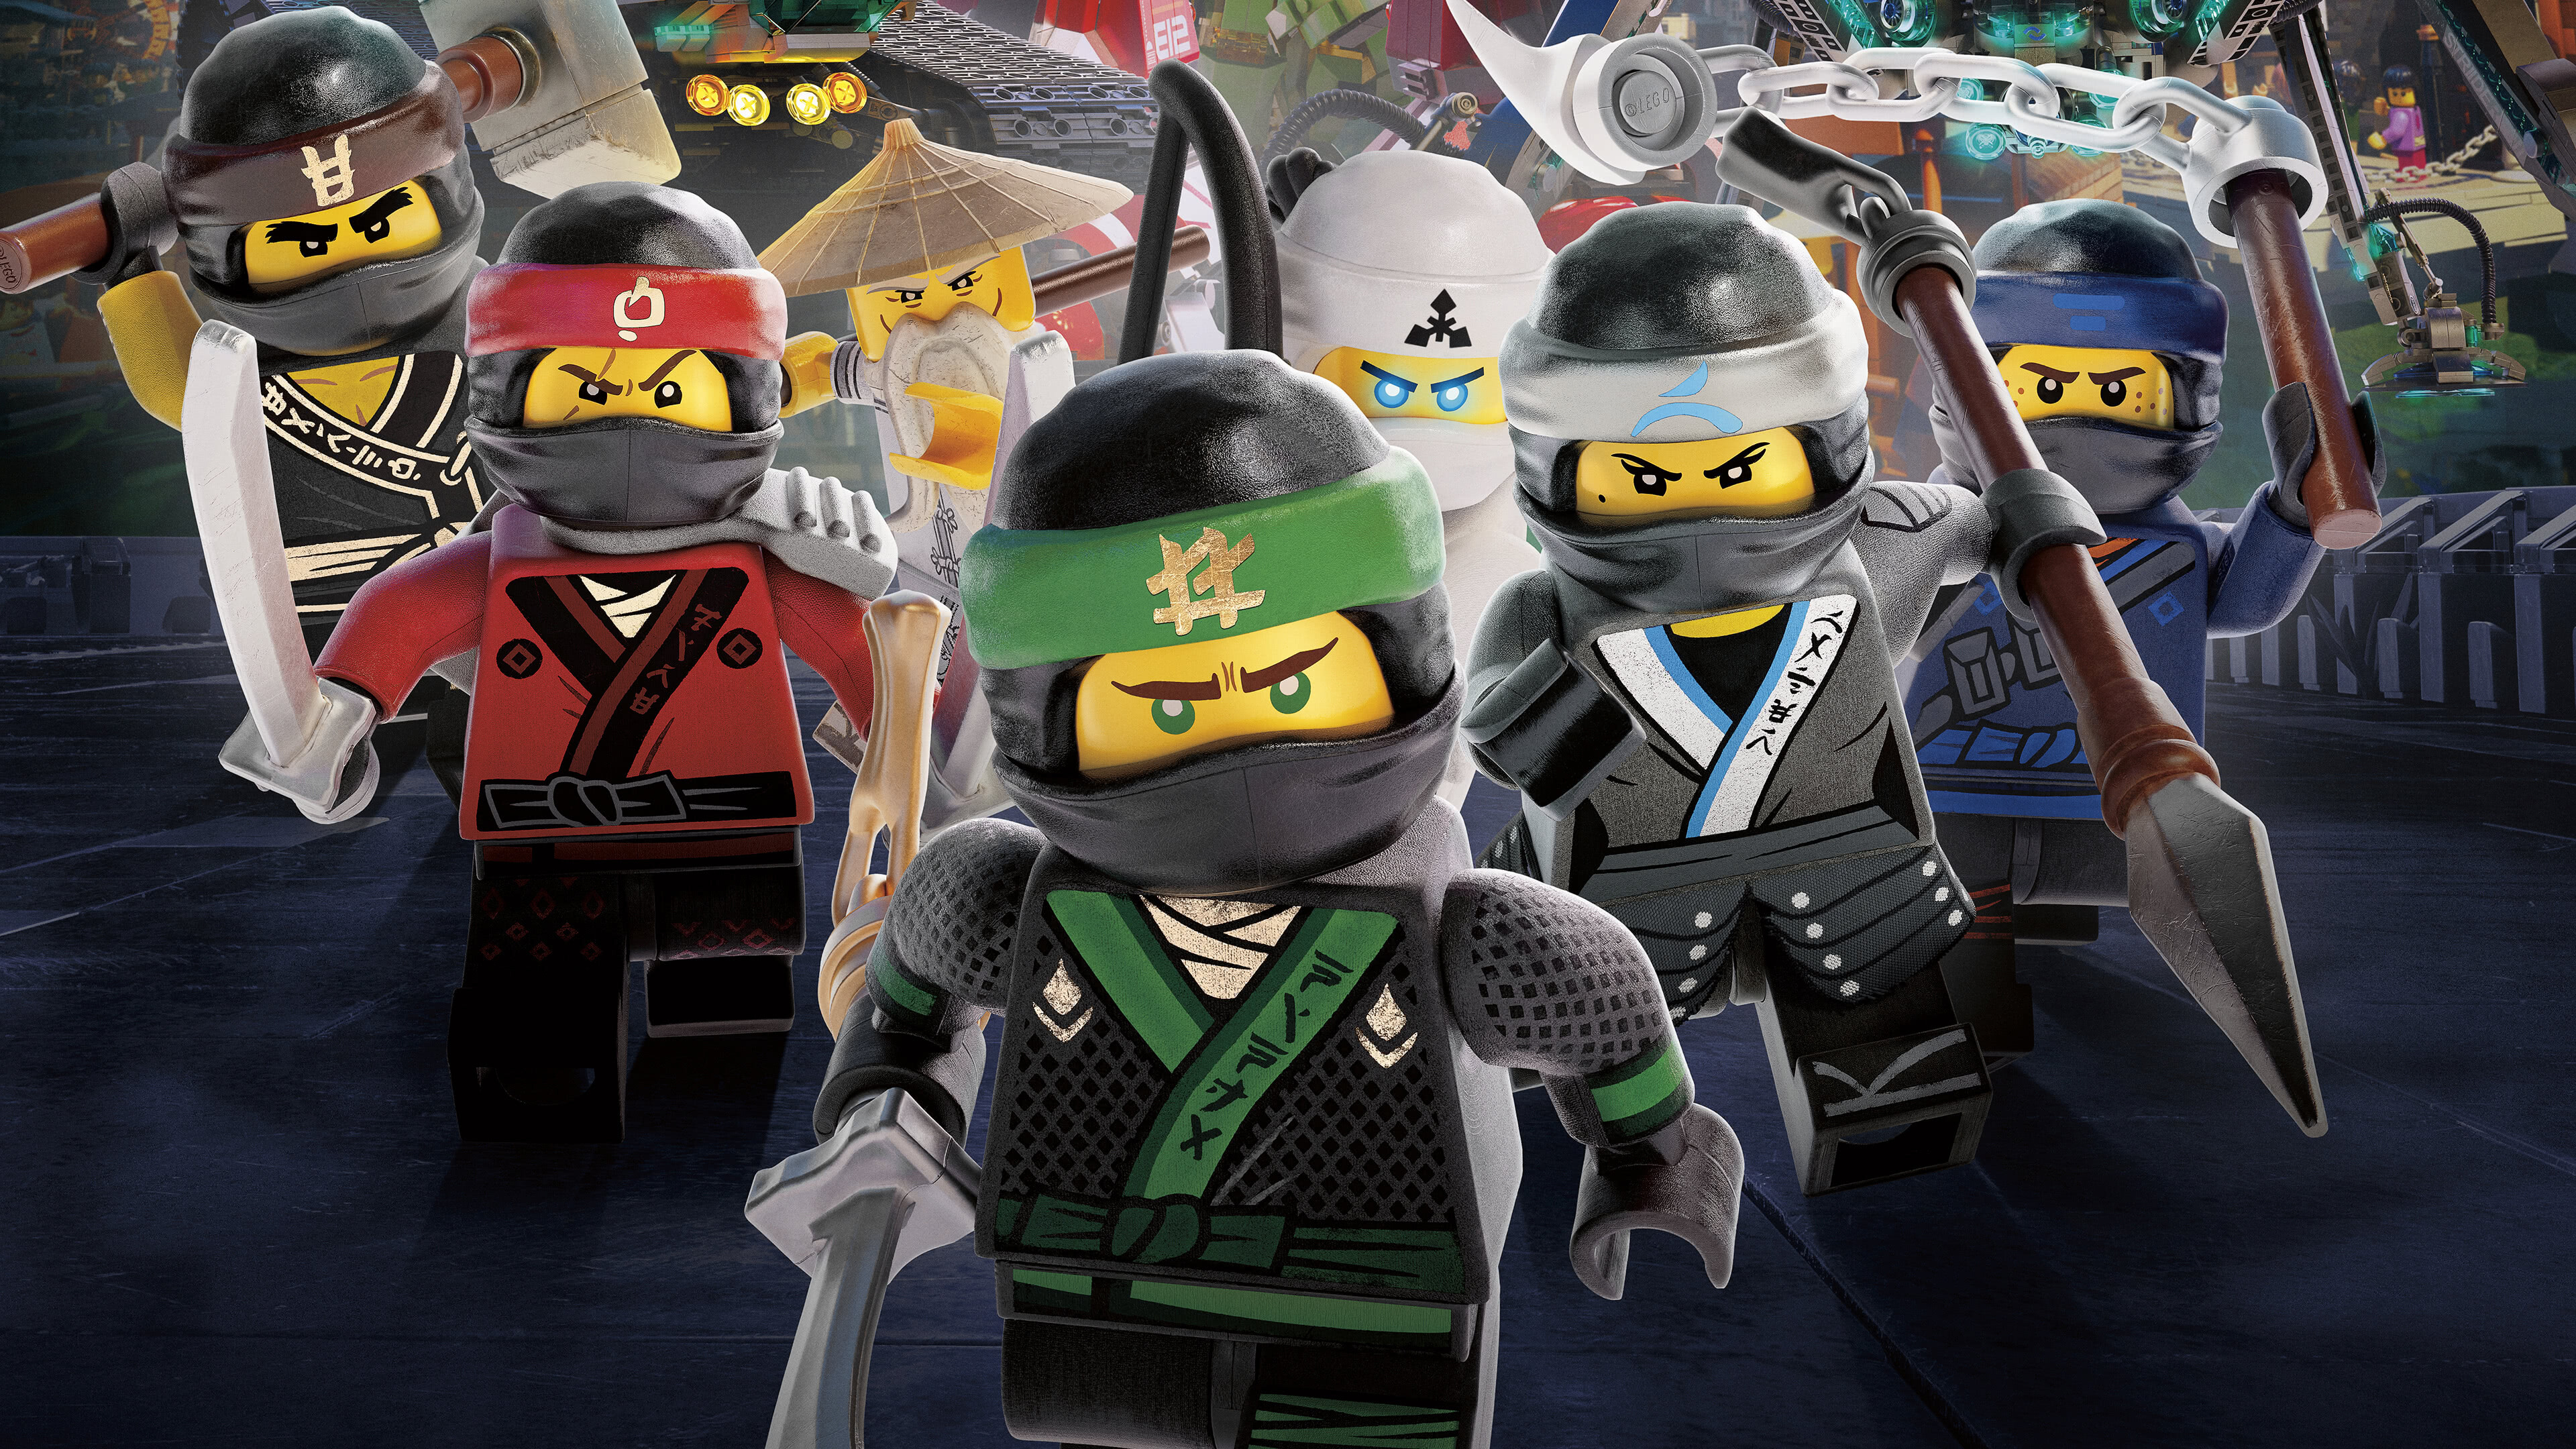 Lego: Ninjago Masters Of Spinjitzu, Offers a wide range of minifigures. 3840x2160 4K Background.